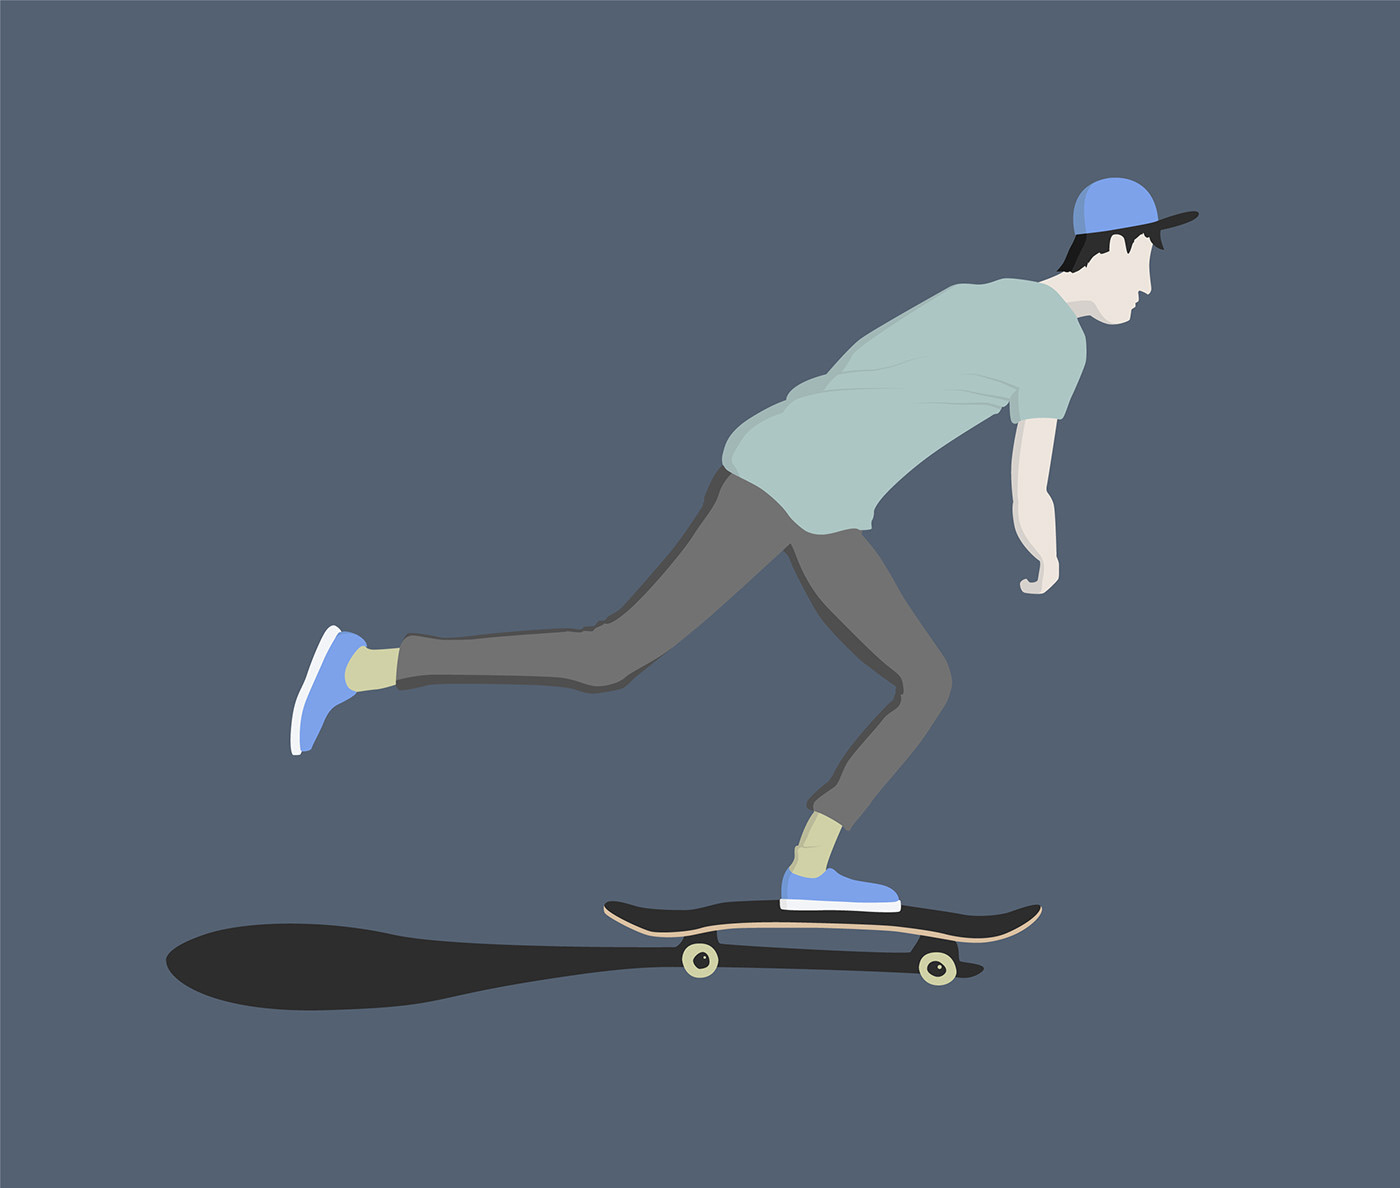 Image may contain: snowboarding, skateboard and skiing